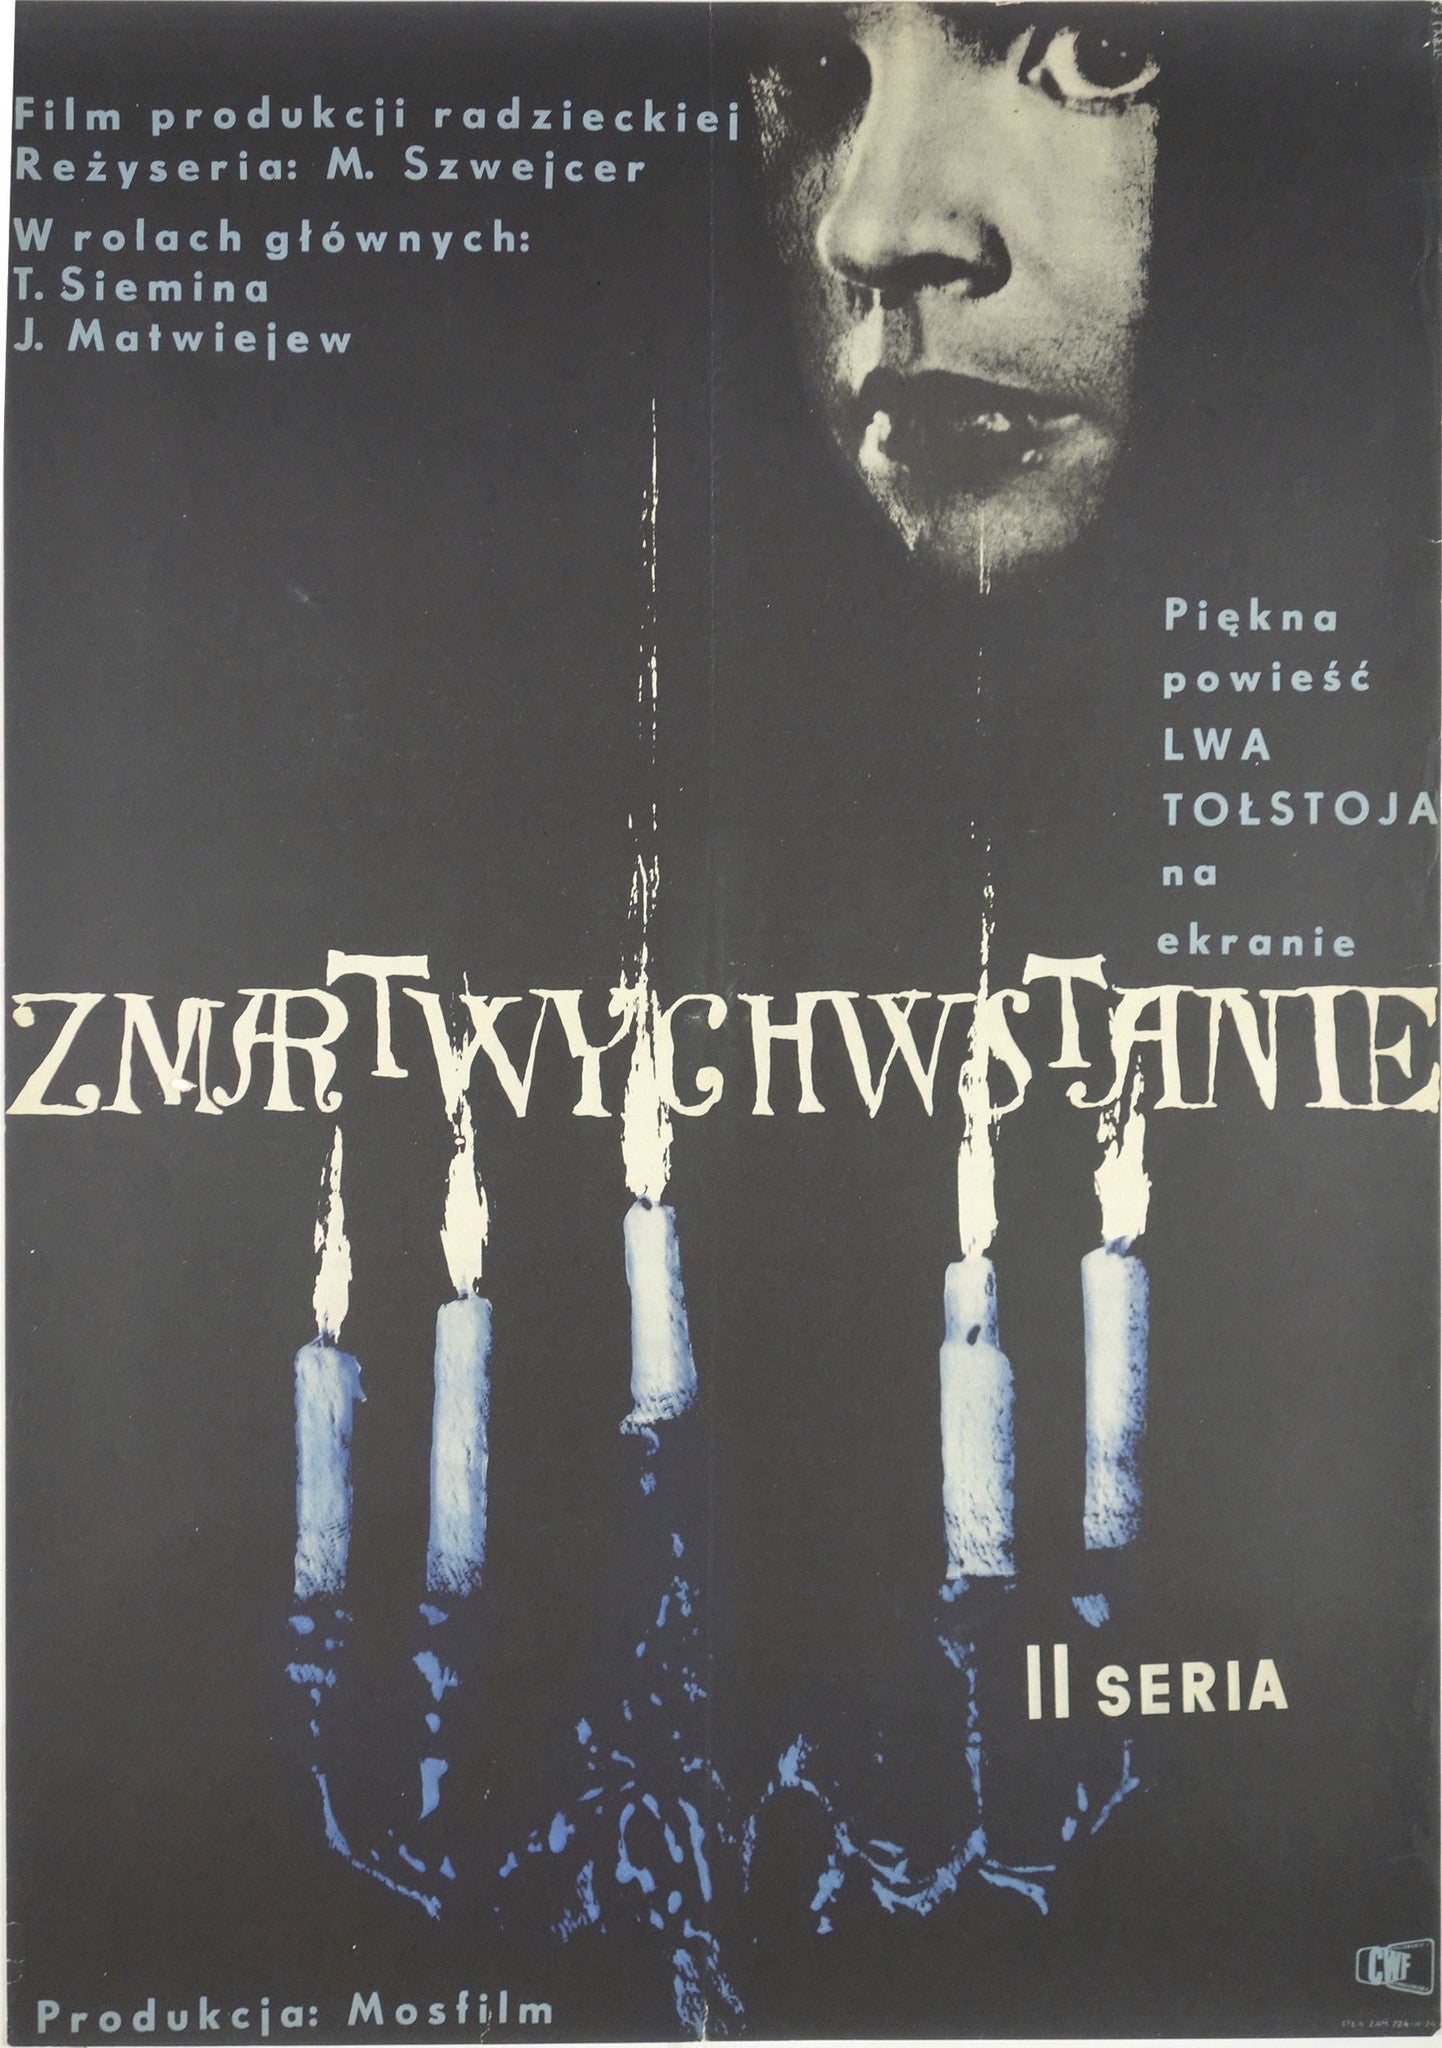 Polish Film Posters